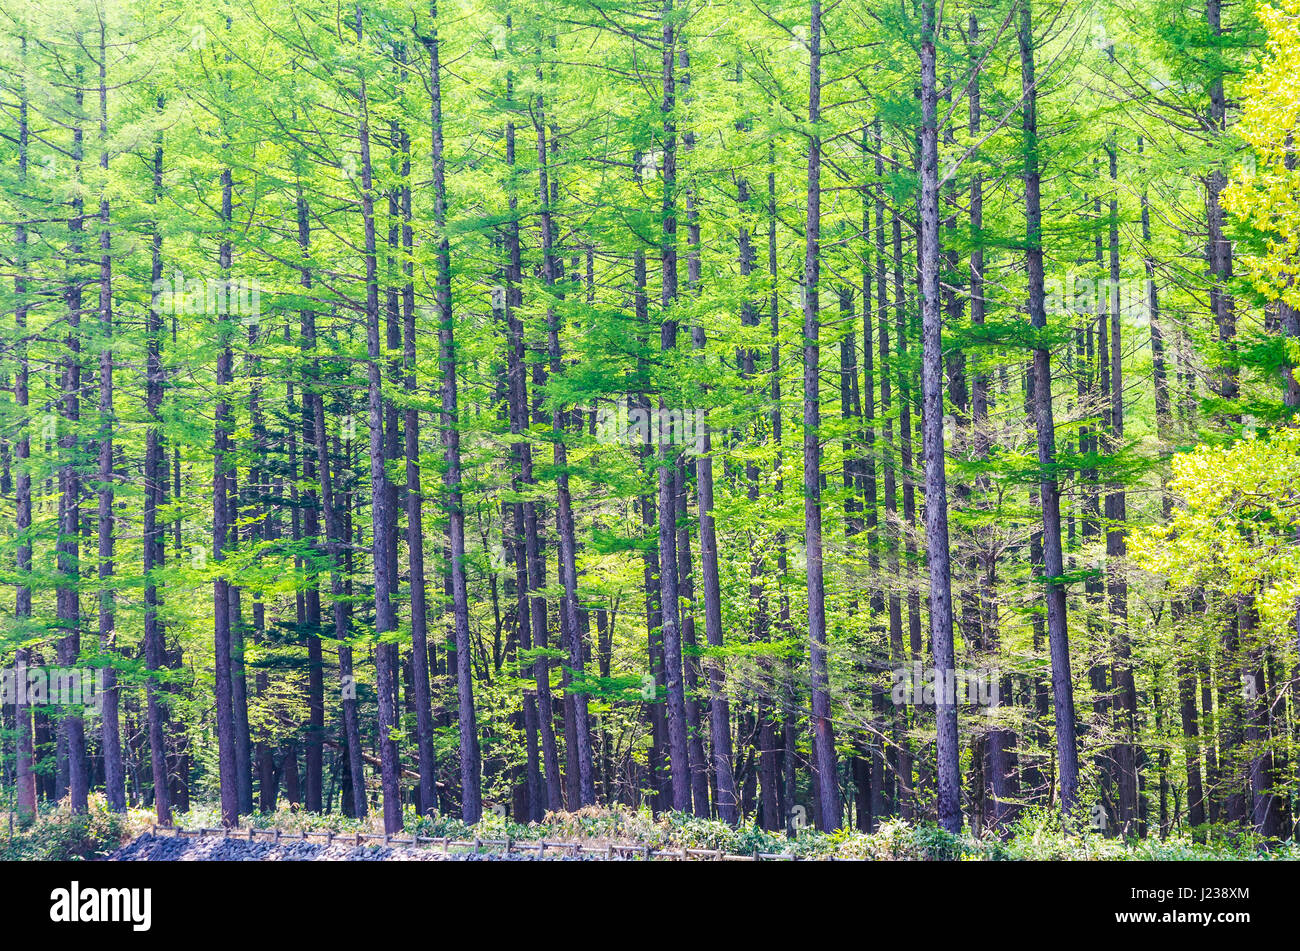 Pine forest in kamikochi national park nagano japan Stock Photo